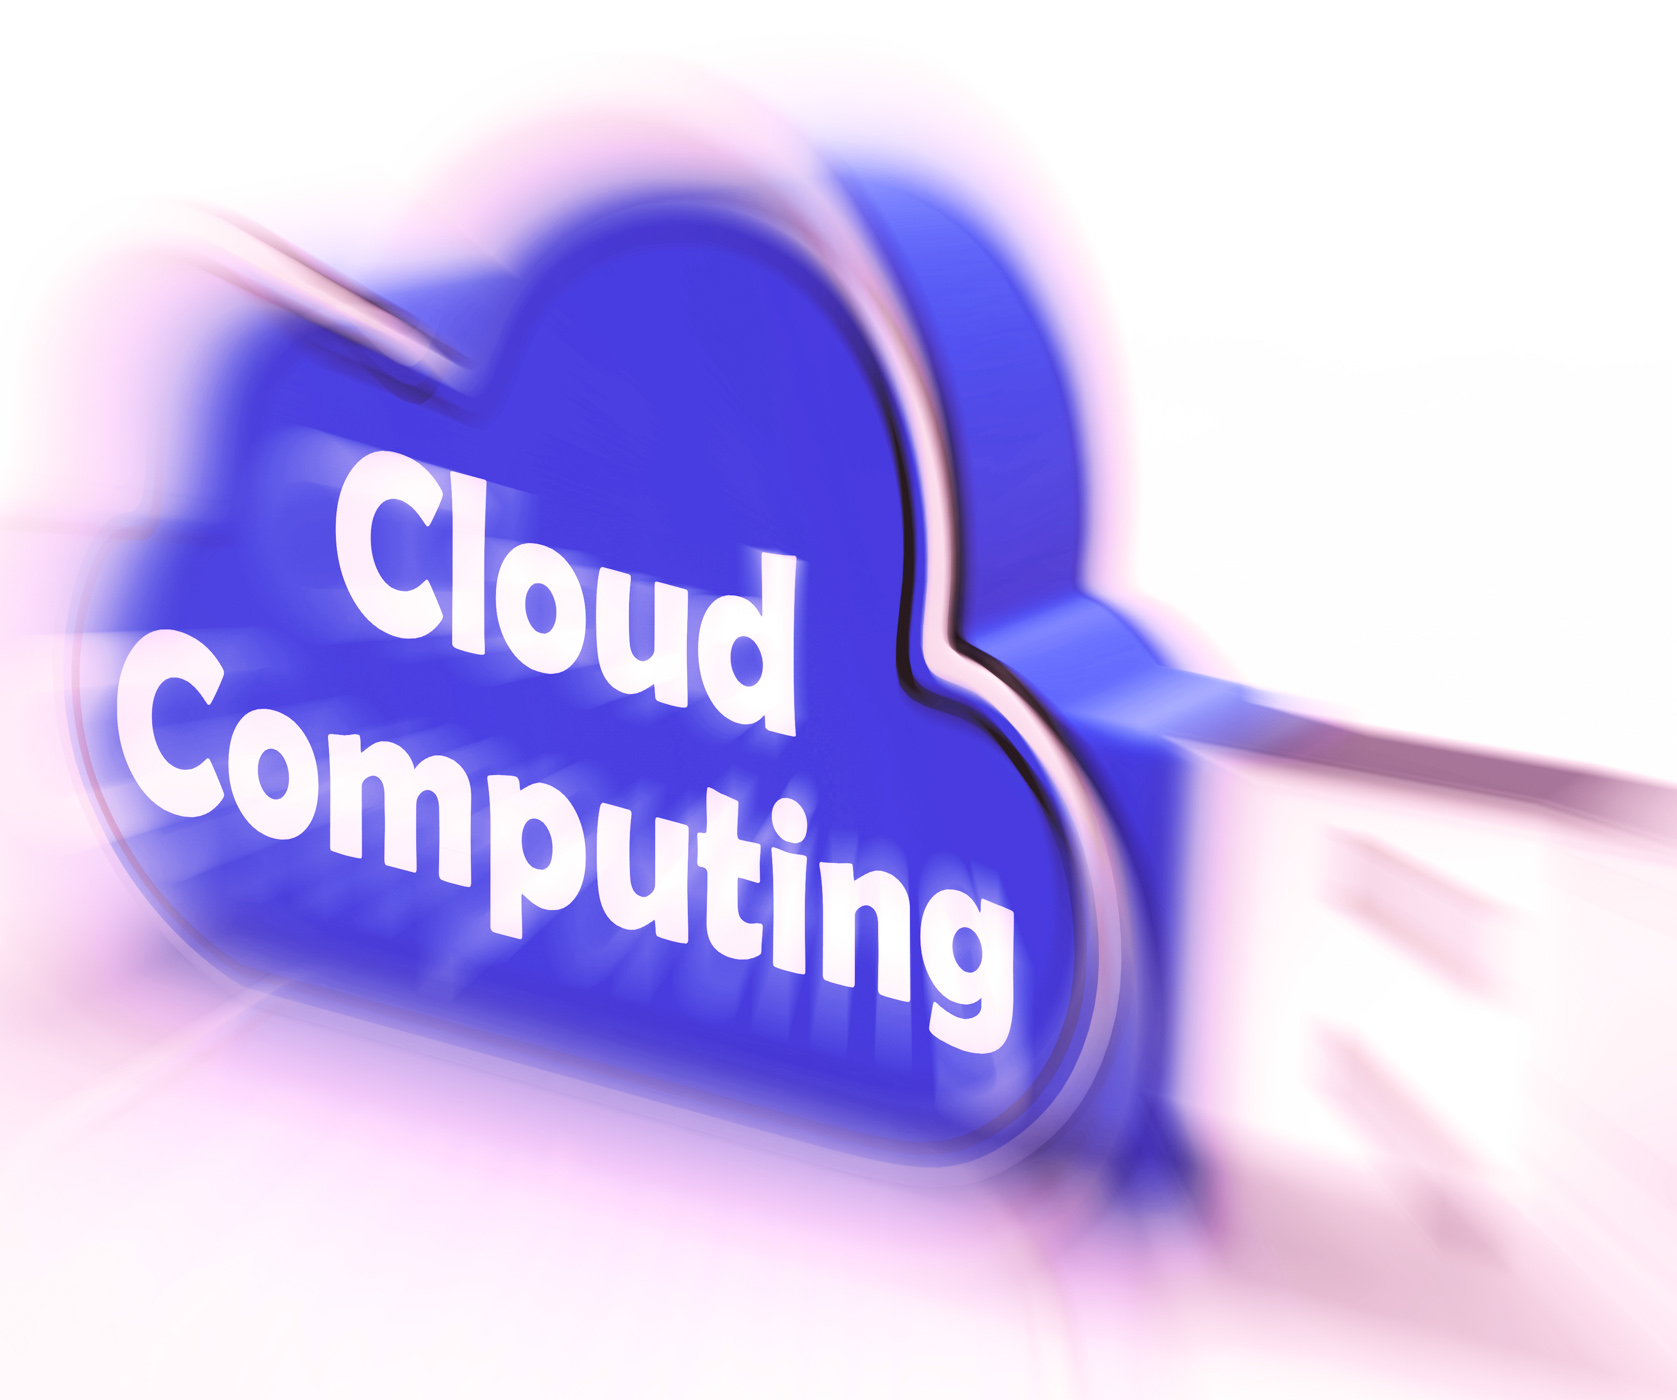 Cloud Computing Cloud USB drive Shows Digital Services And Online Back, Cloud, Network, Web, Technology, HQ Photo